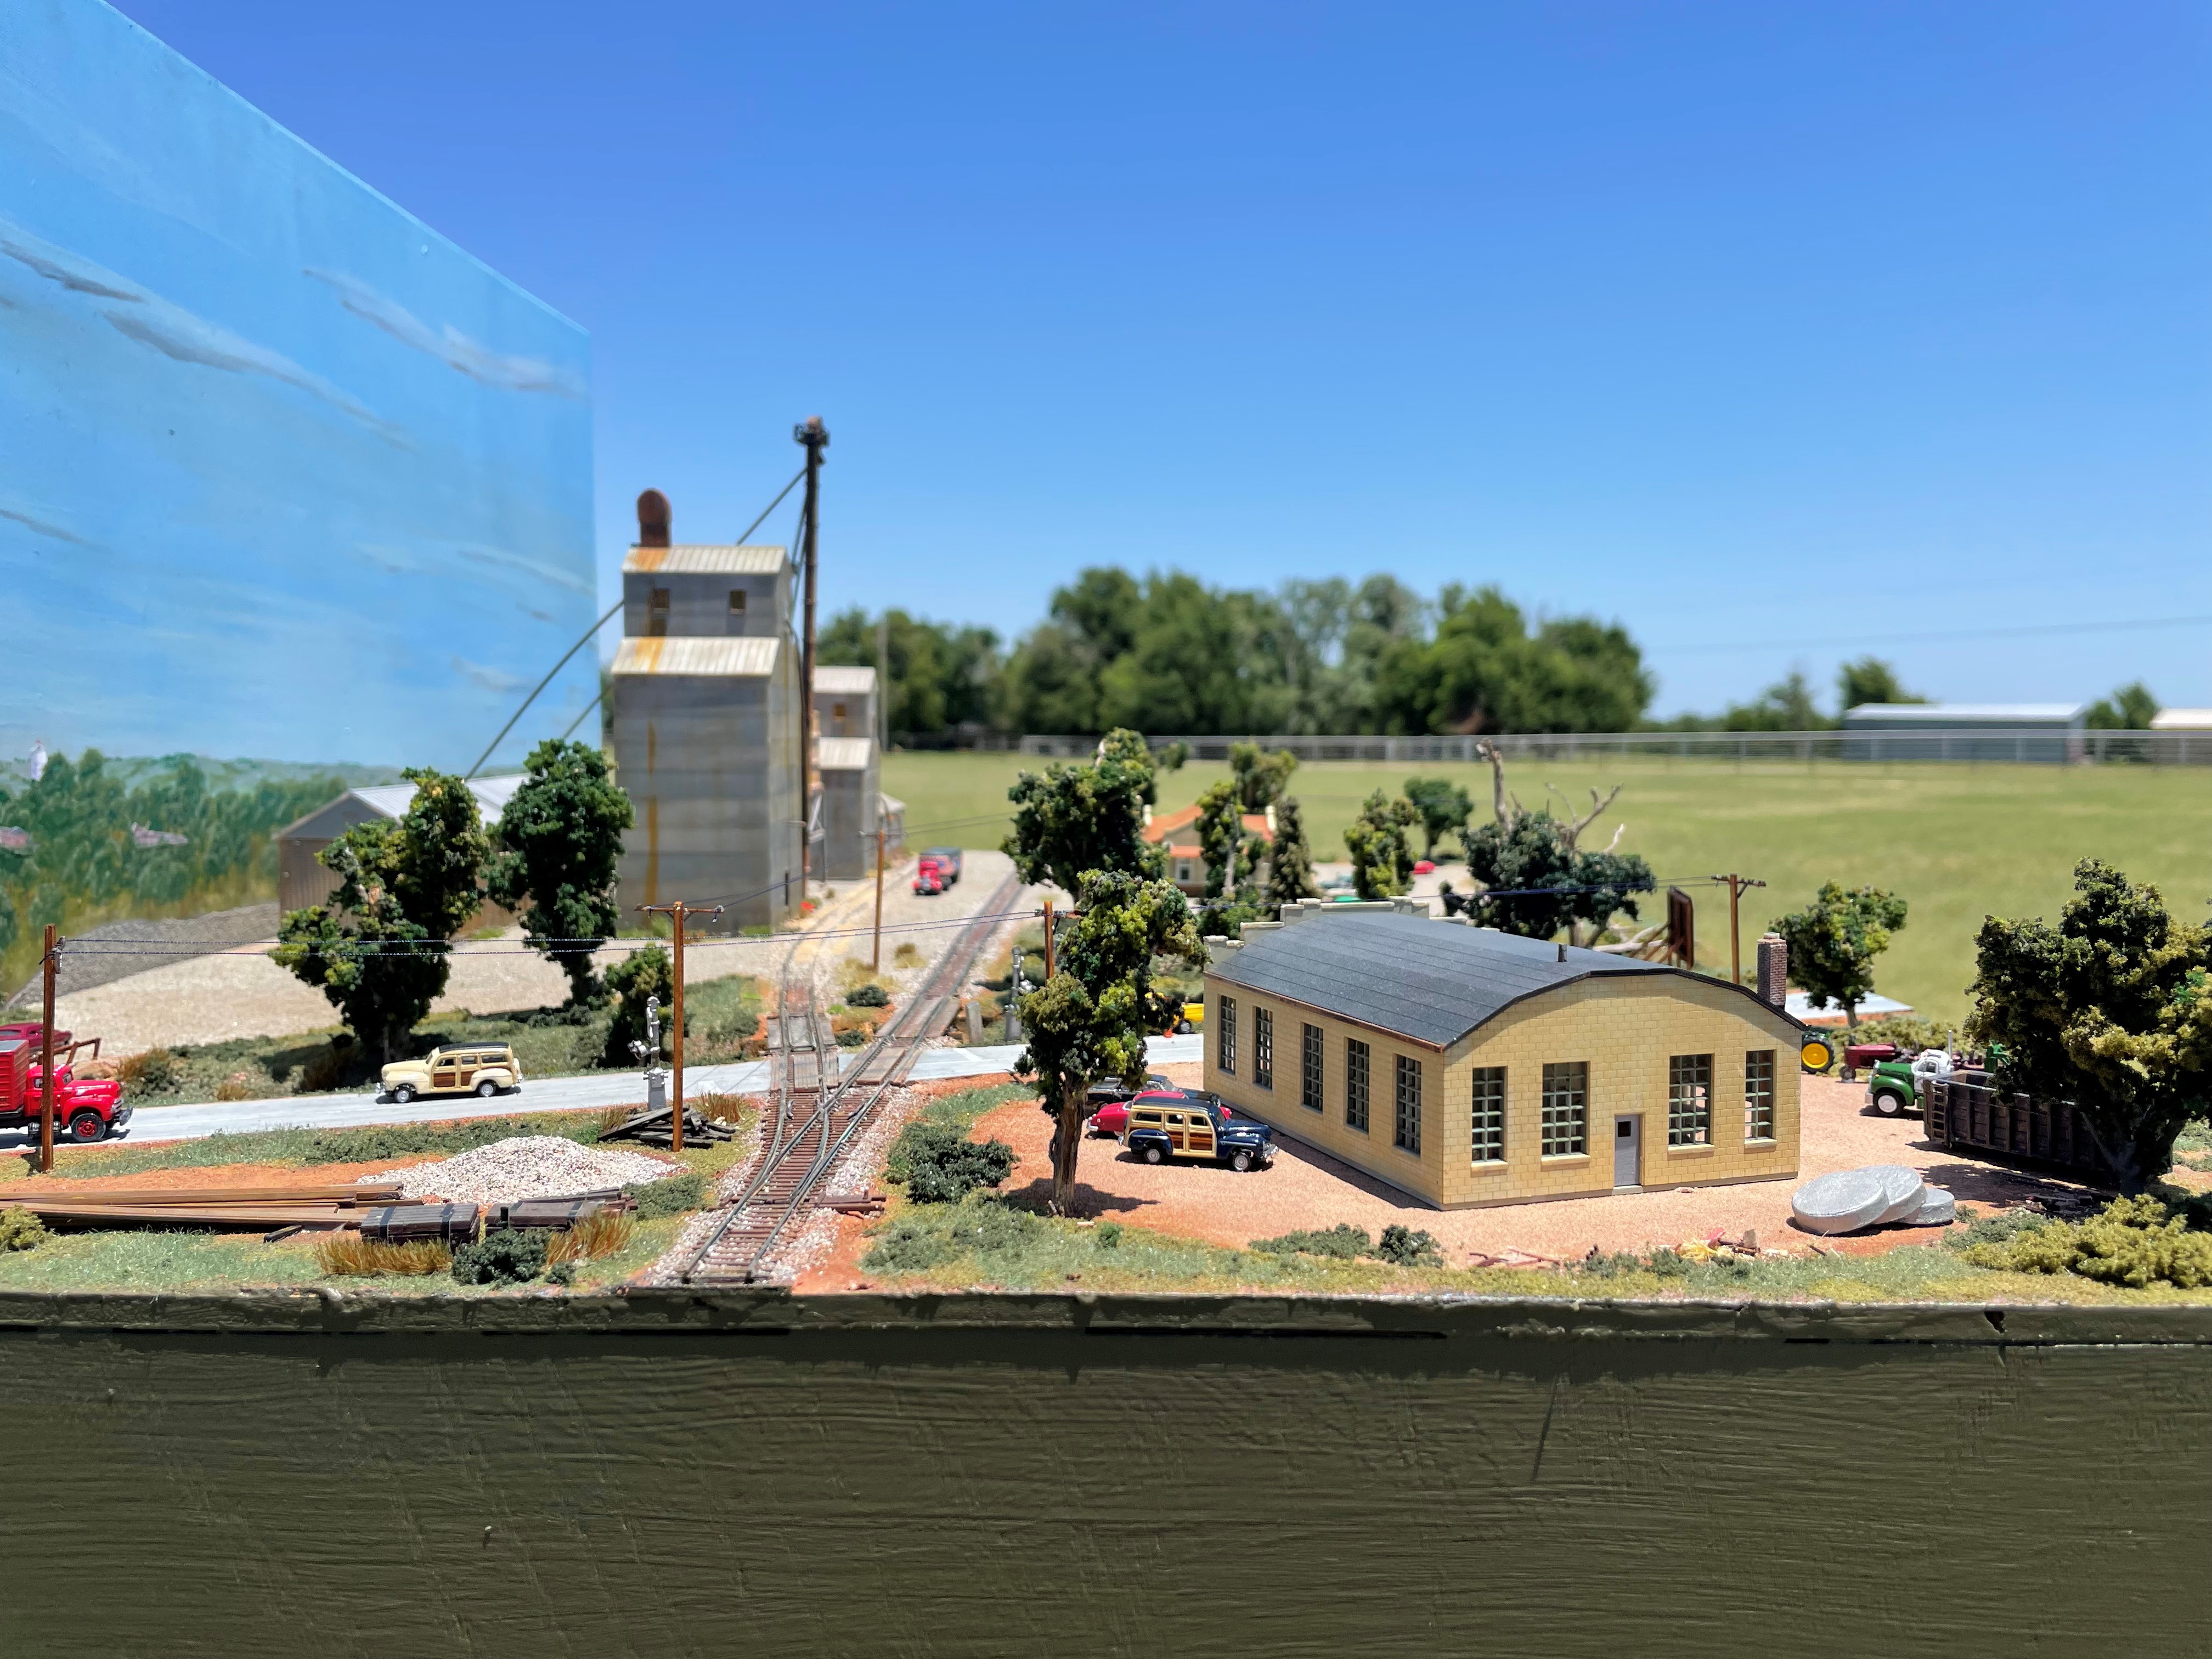 A recreated three-dimensional image of Oklahoma N-Rail model train display